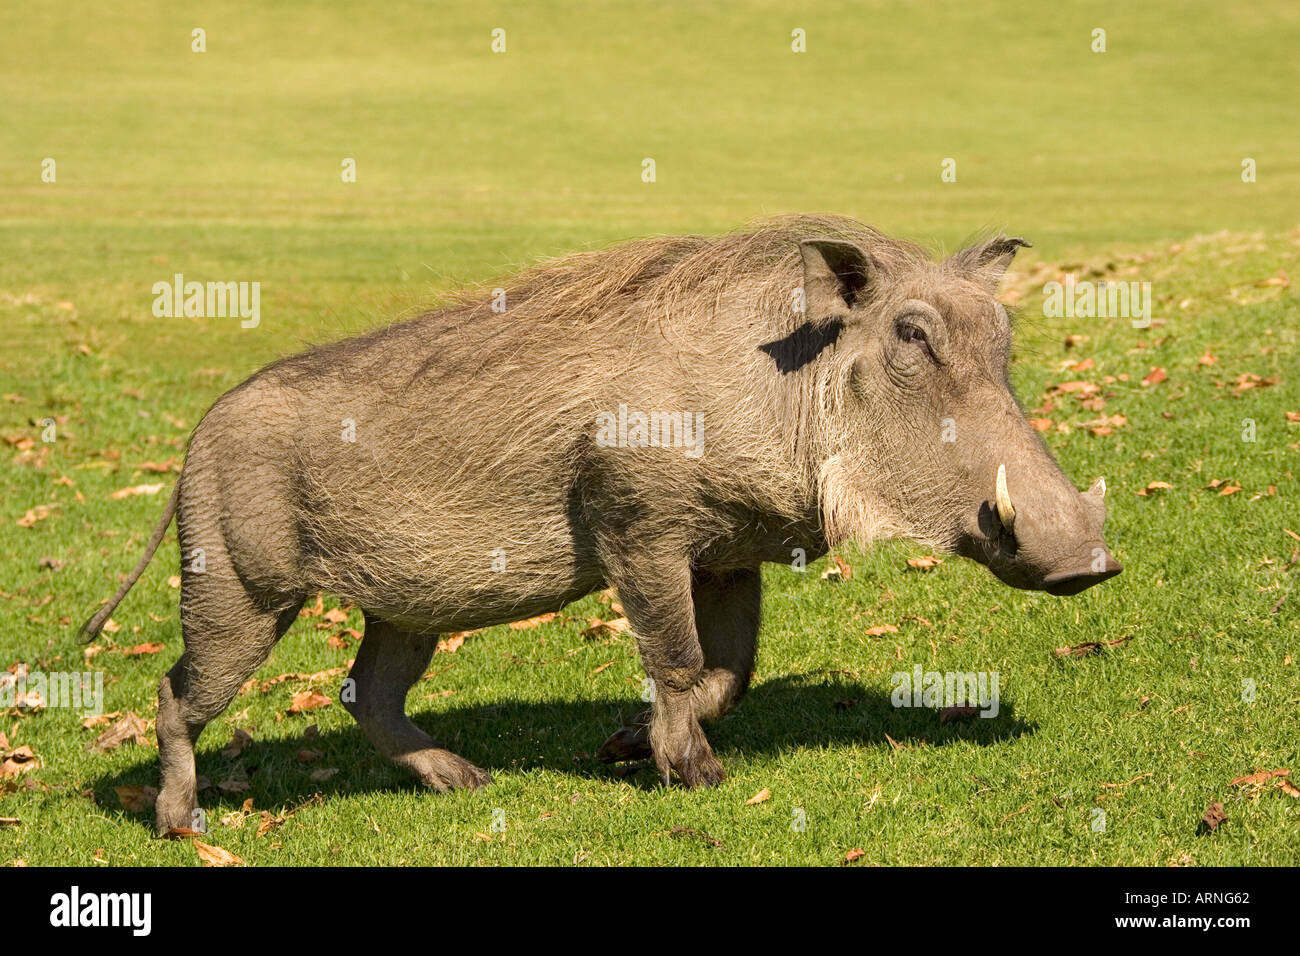 Cape warthog, Somali warthog, desert warthog (Phacochoerus aethiopicus),  South Africa , Jul 05 Stock Photo - Alamy